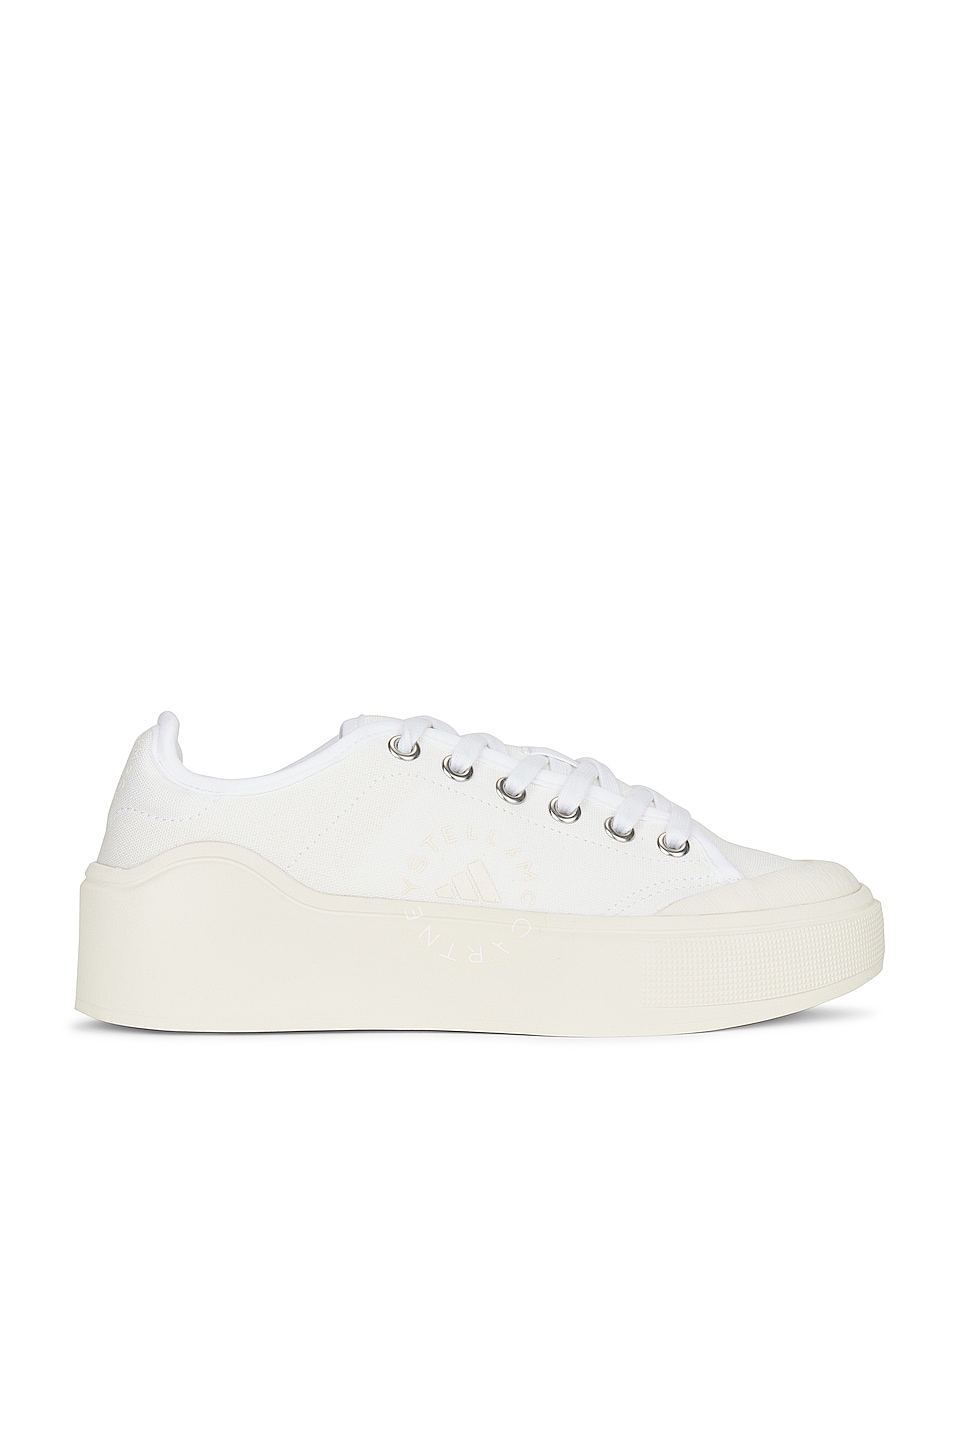 adidas by Stella McCartney Court Sneaker in White &amp; Off White | REVOLVE